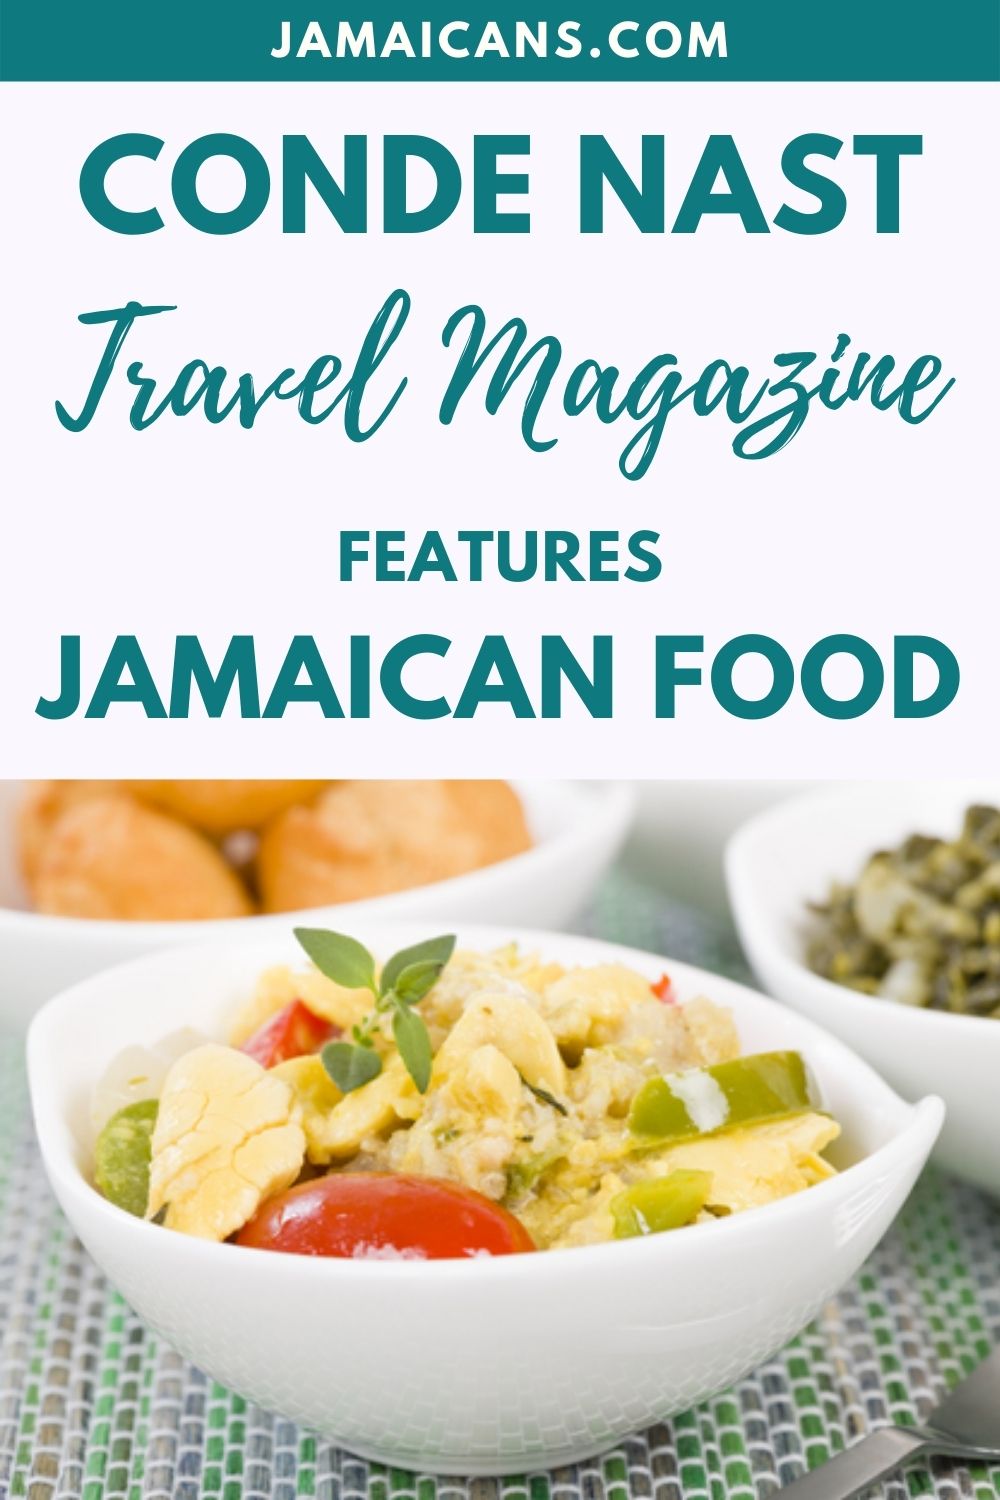 Conde Nast Travel Magazine Features Jamaican Food